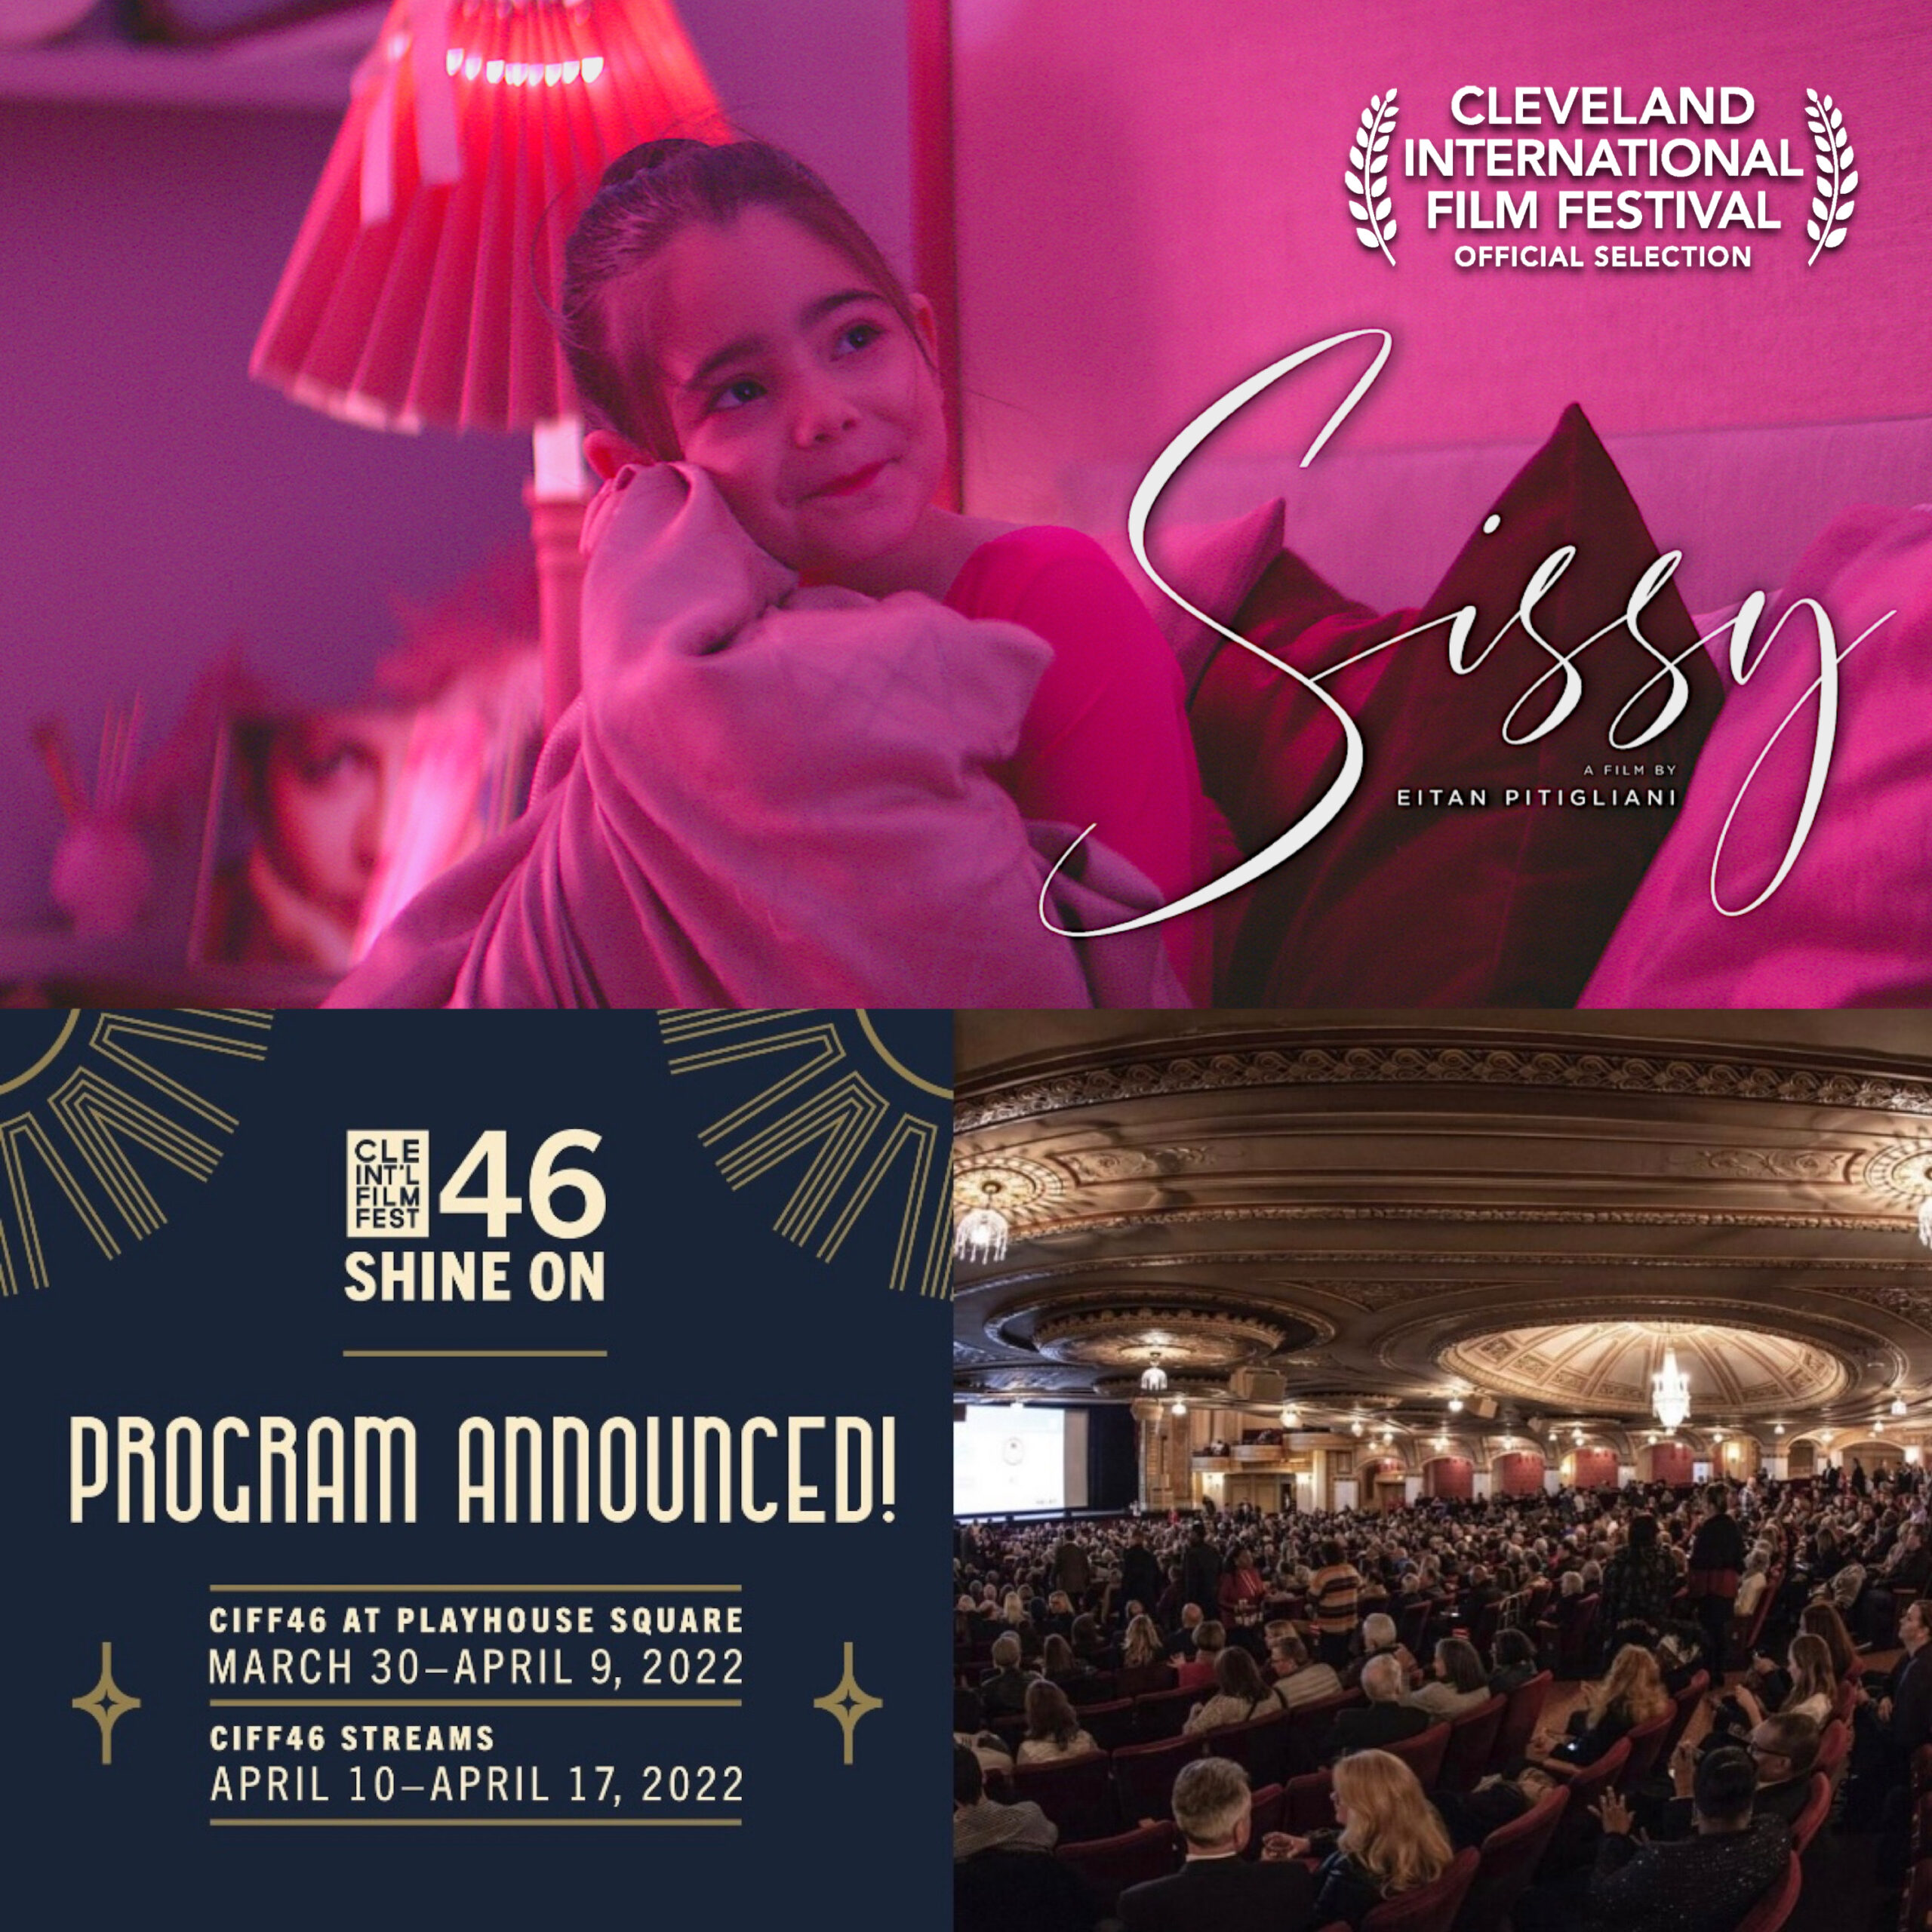 Cleveland Film Festival: Official Selection  per "Sissy", con Dea Lanzaro!